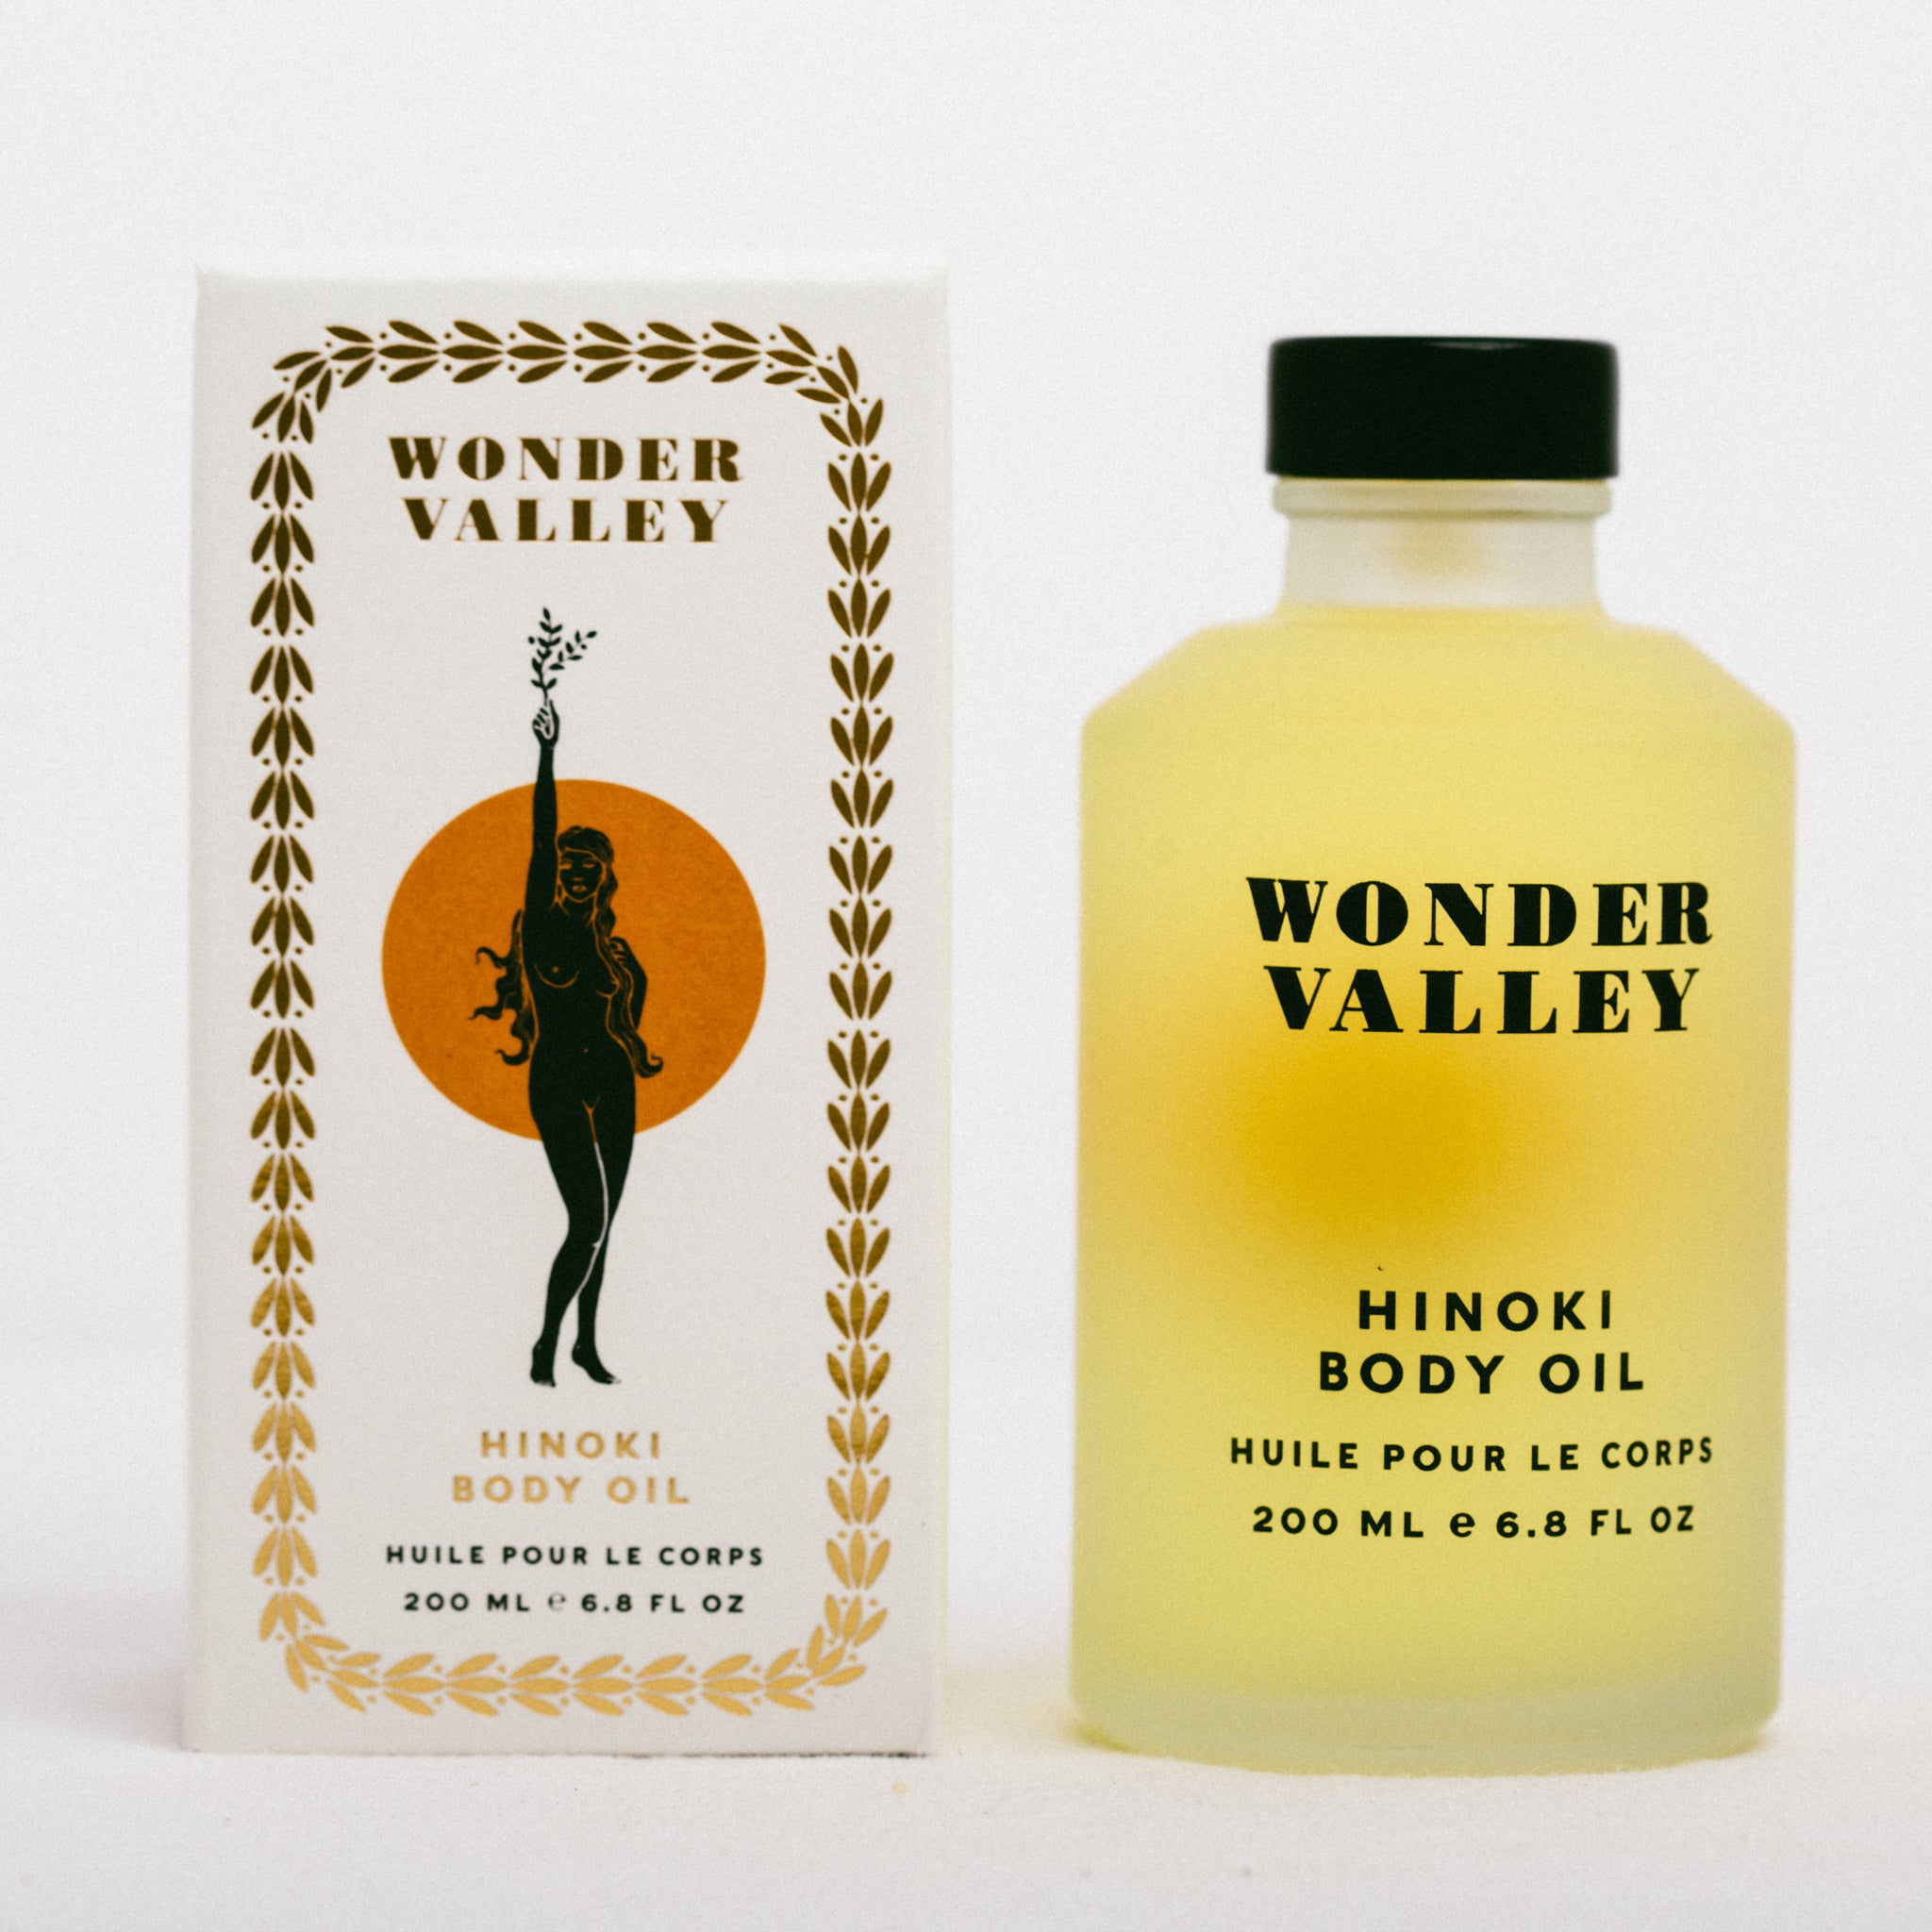 HINOKI BODY OIL || WONDER VALLEY